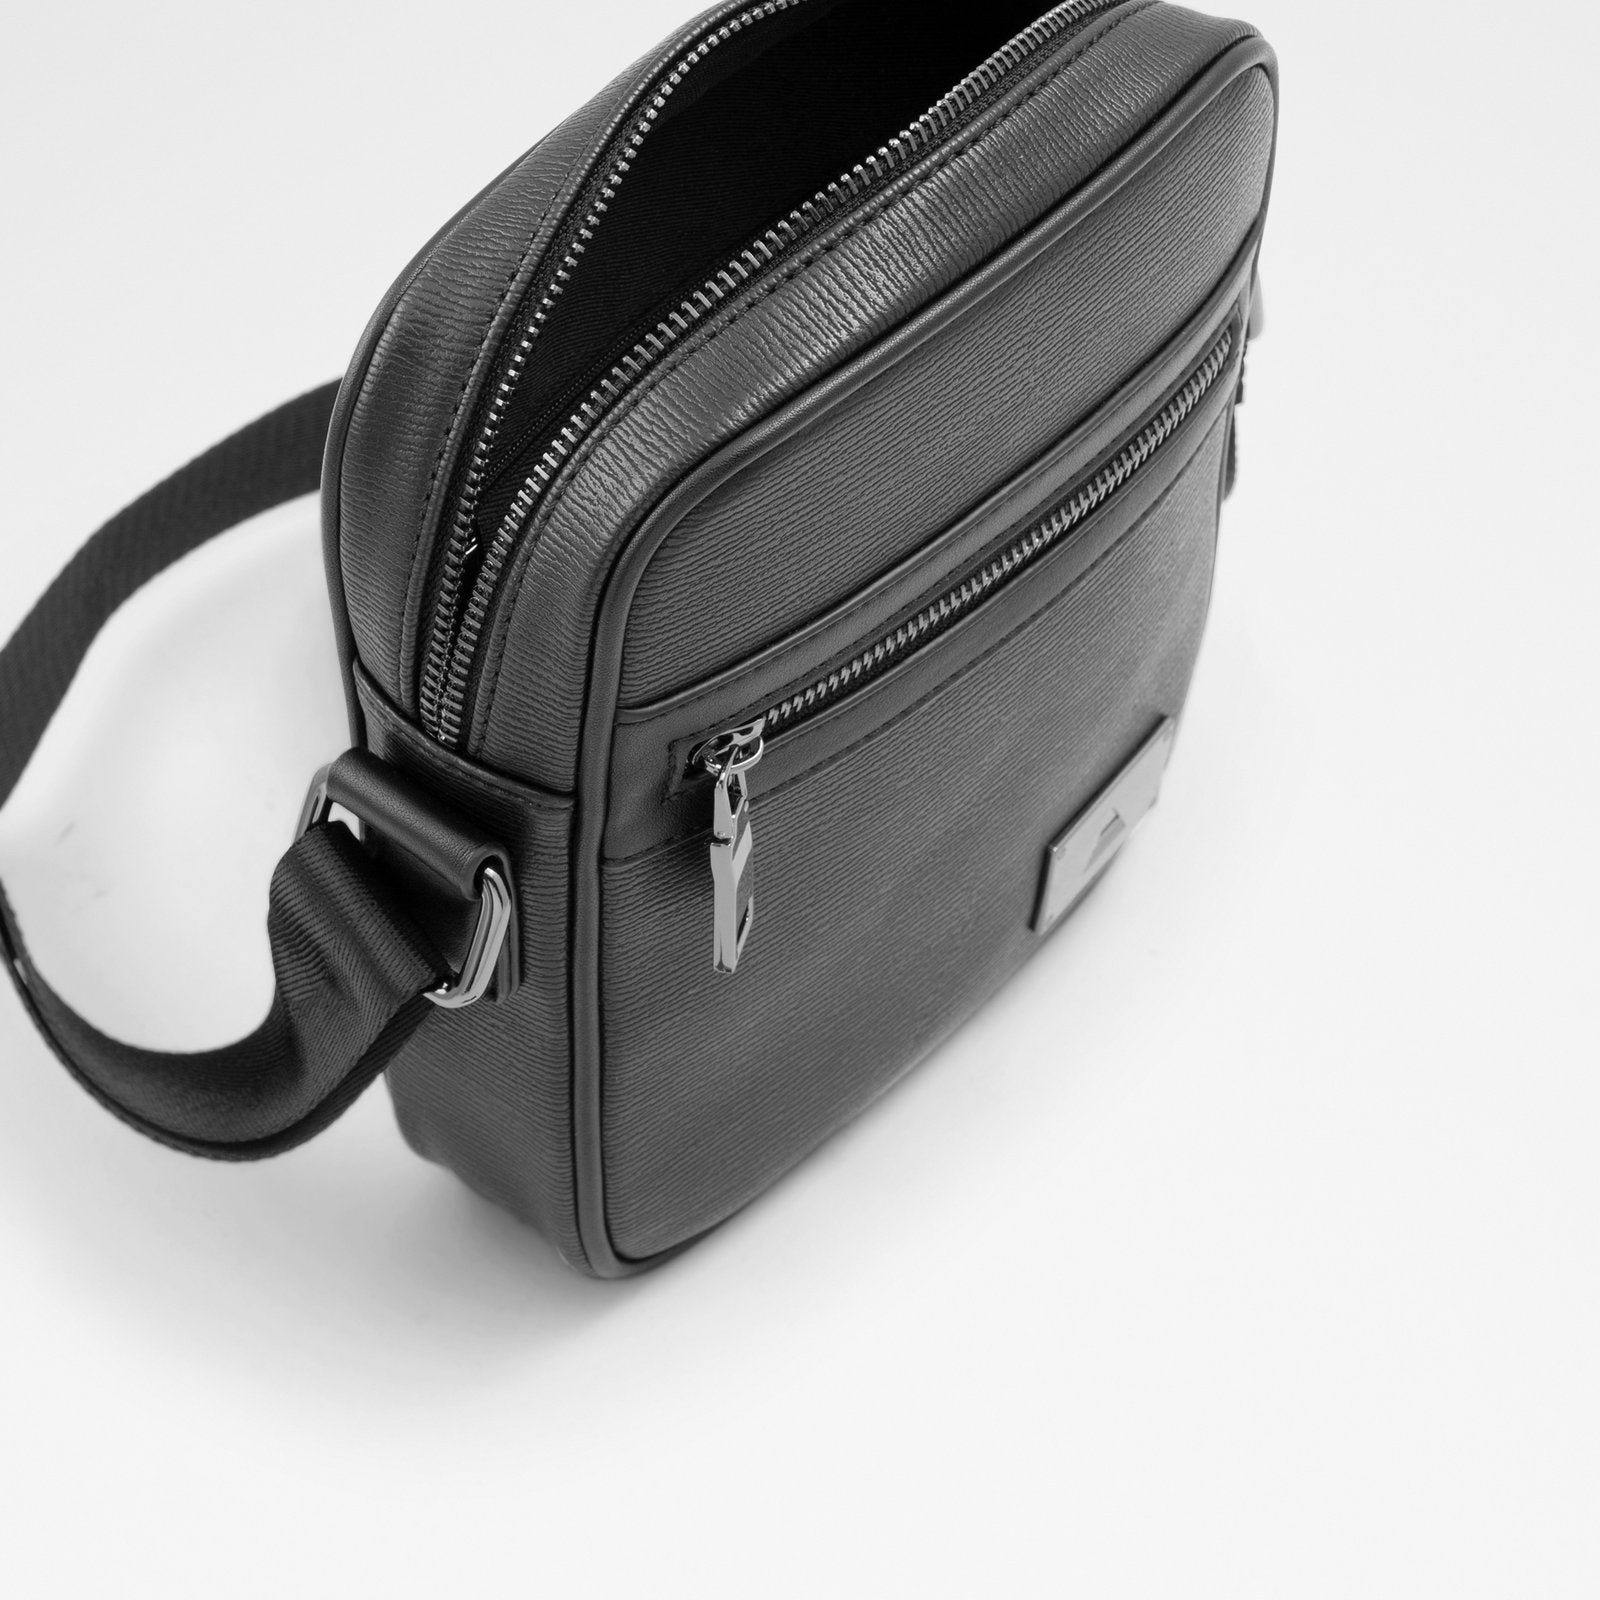 Elaewien / Cross body Bag Bag - Black - ALDO KSA